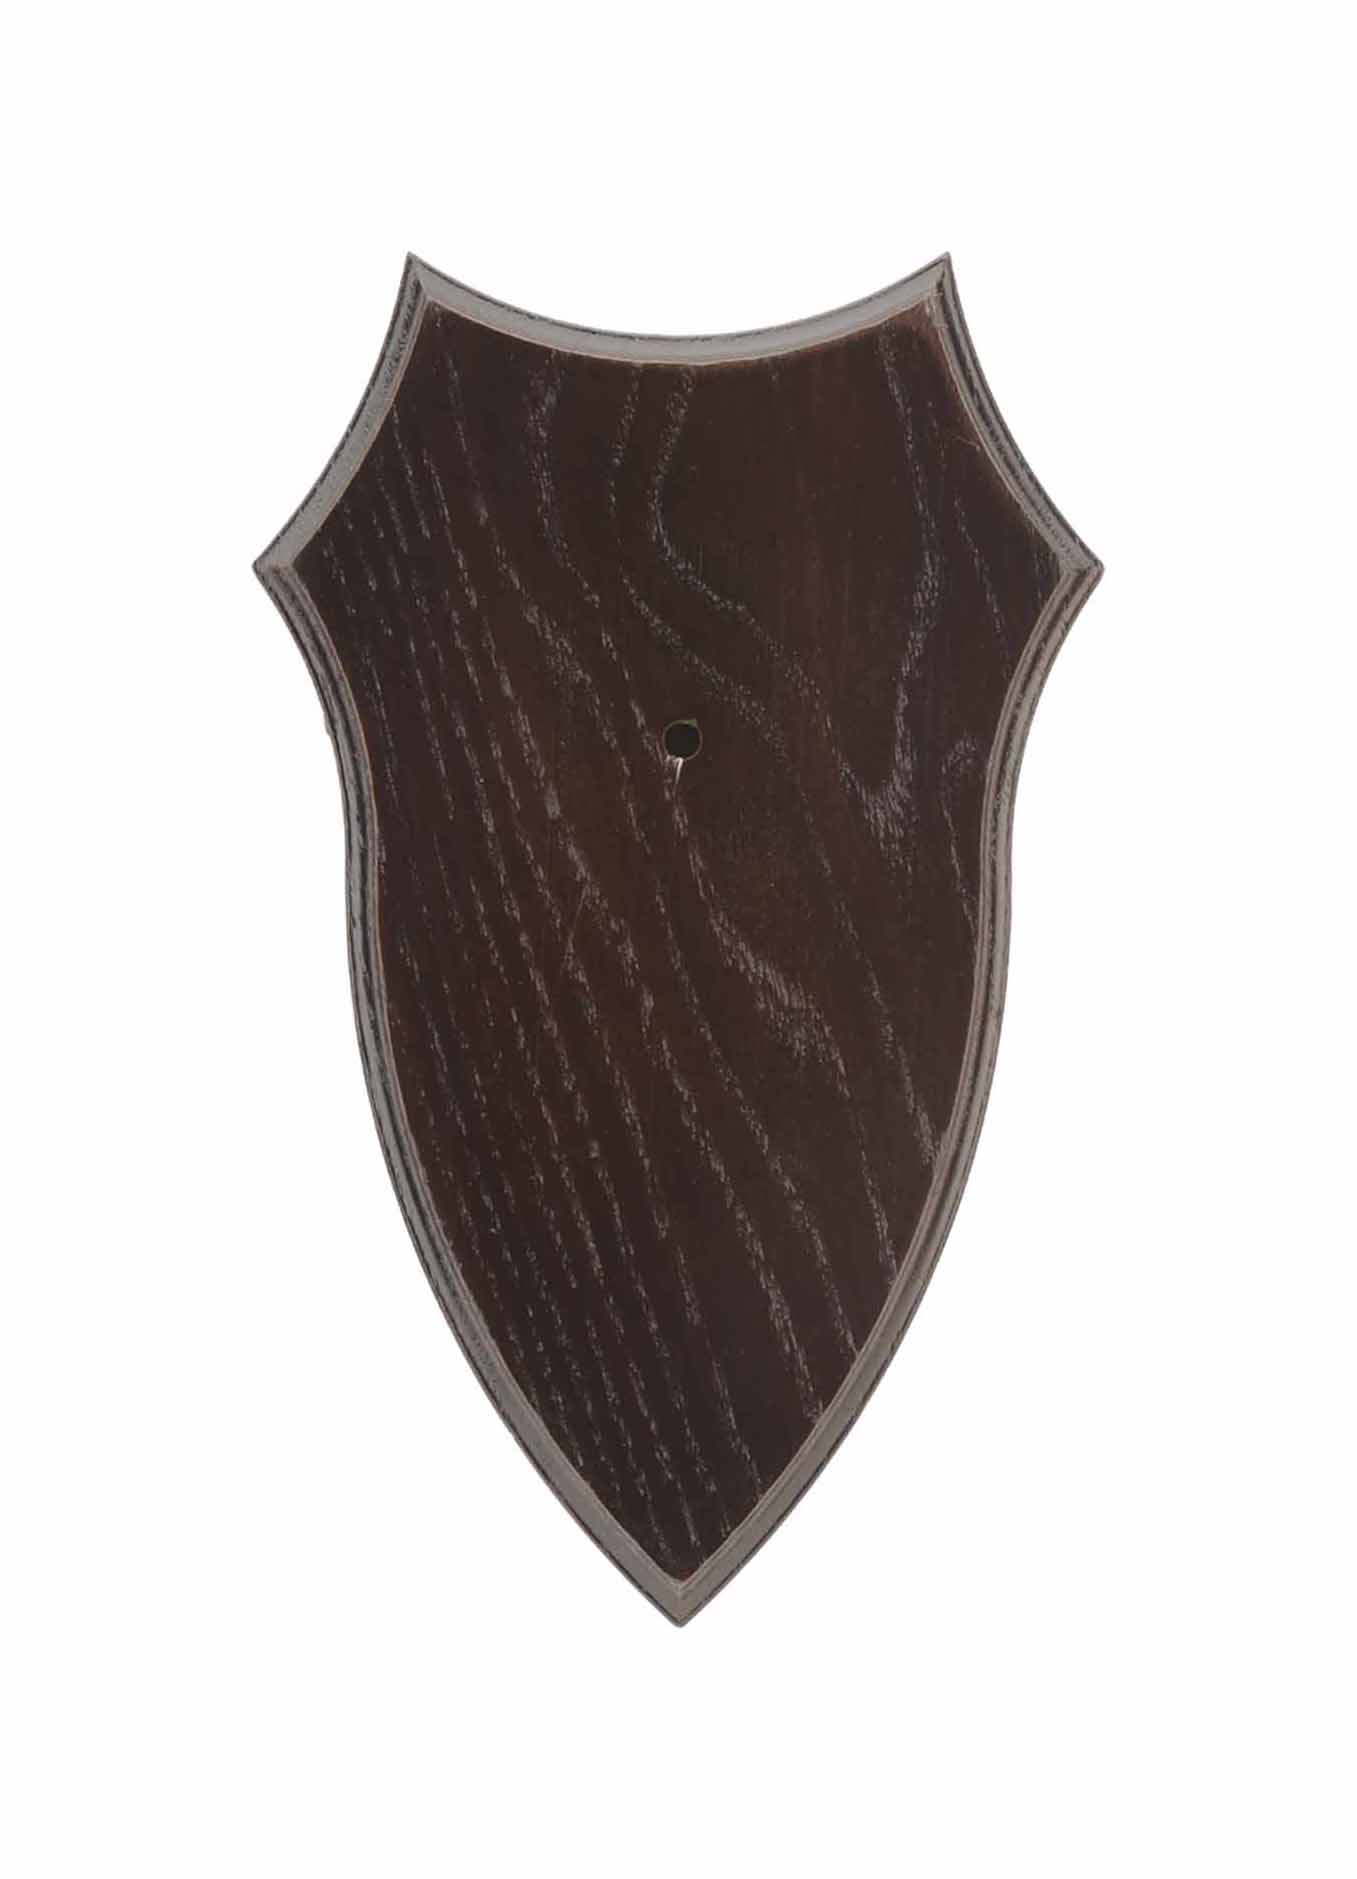 Oak Deer Trophy Plate 5 - 21x12cm Dark